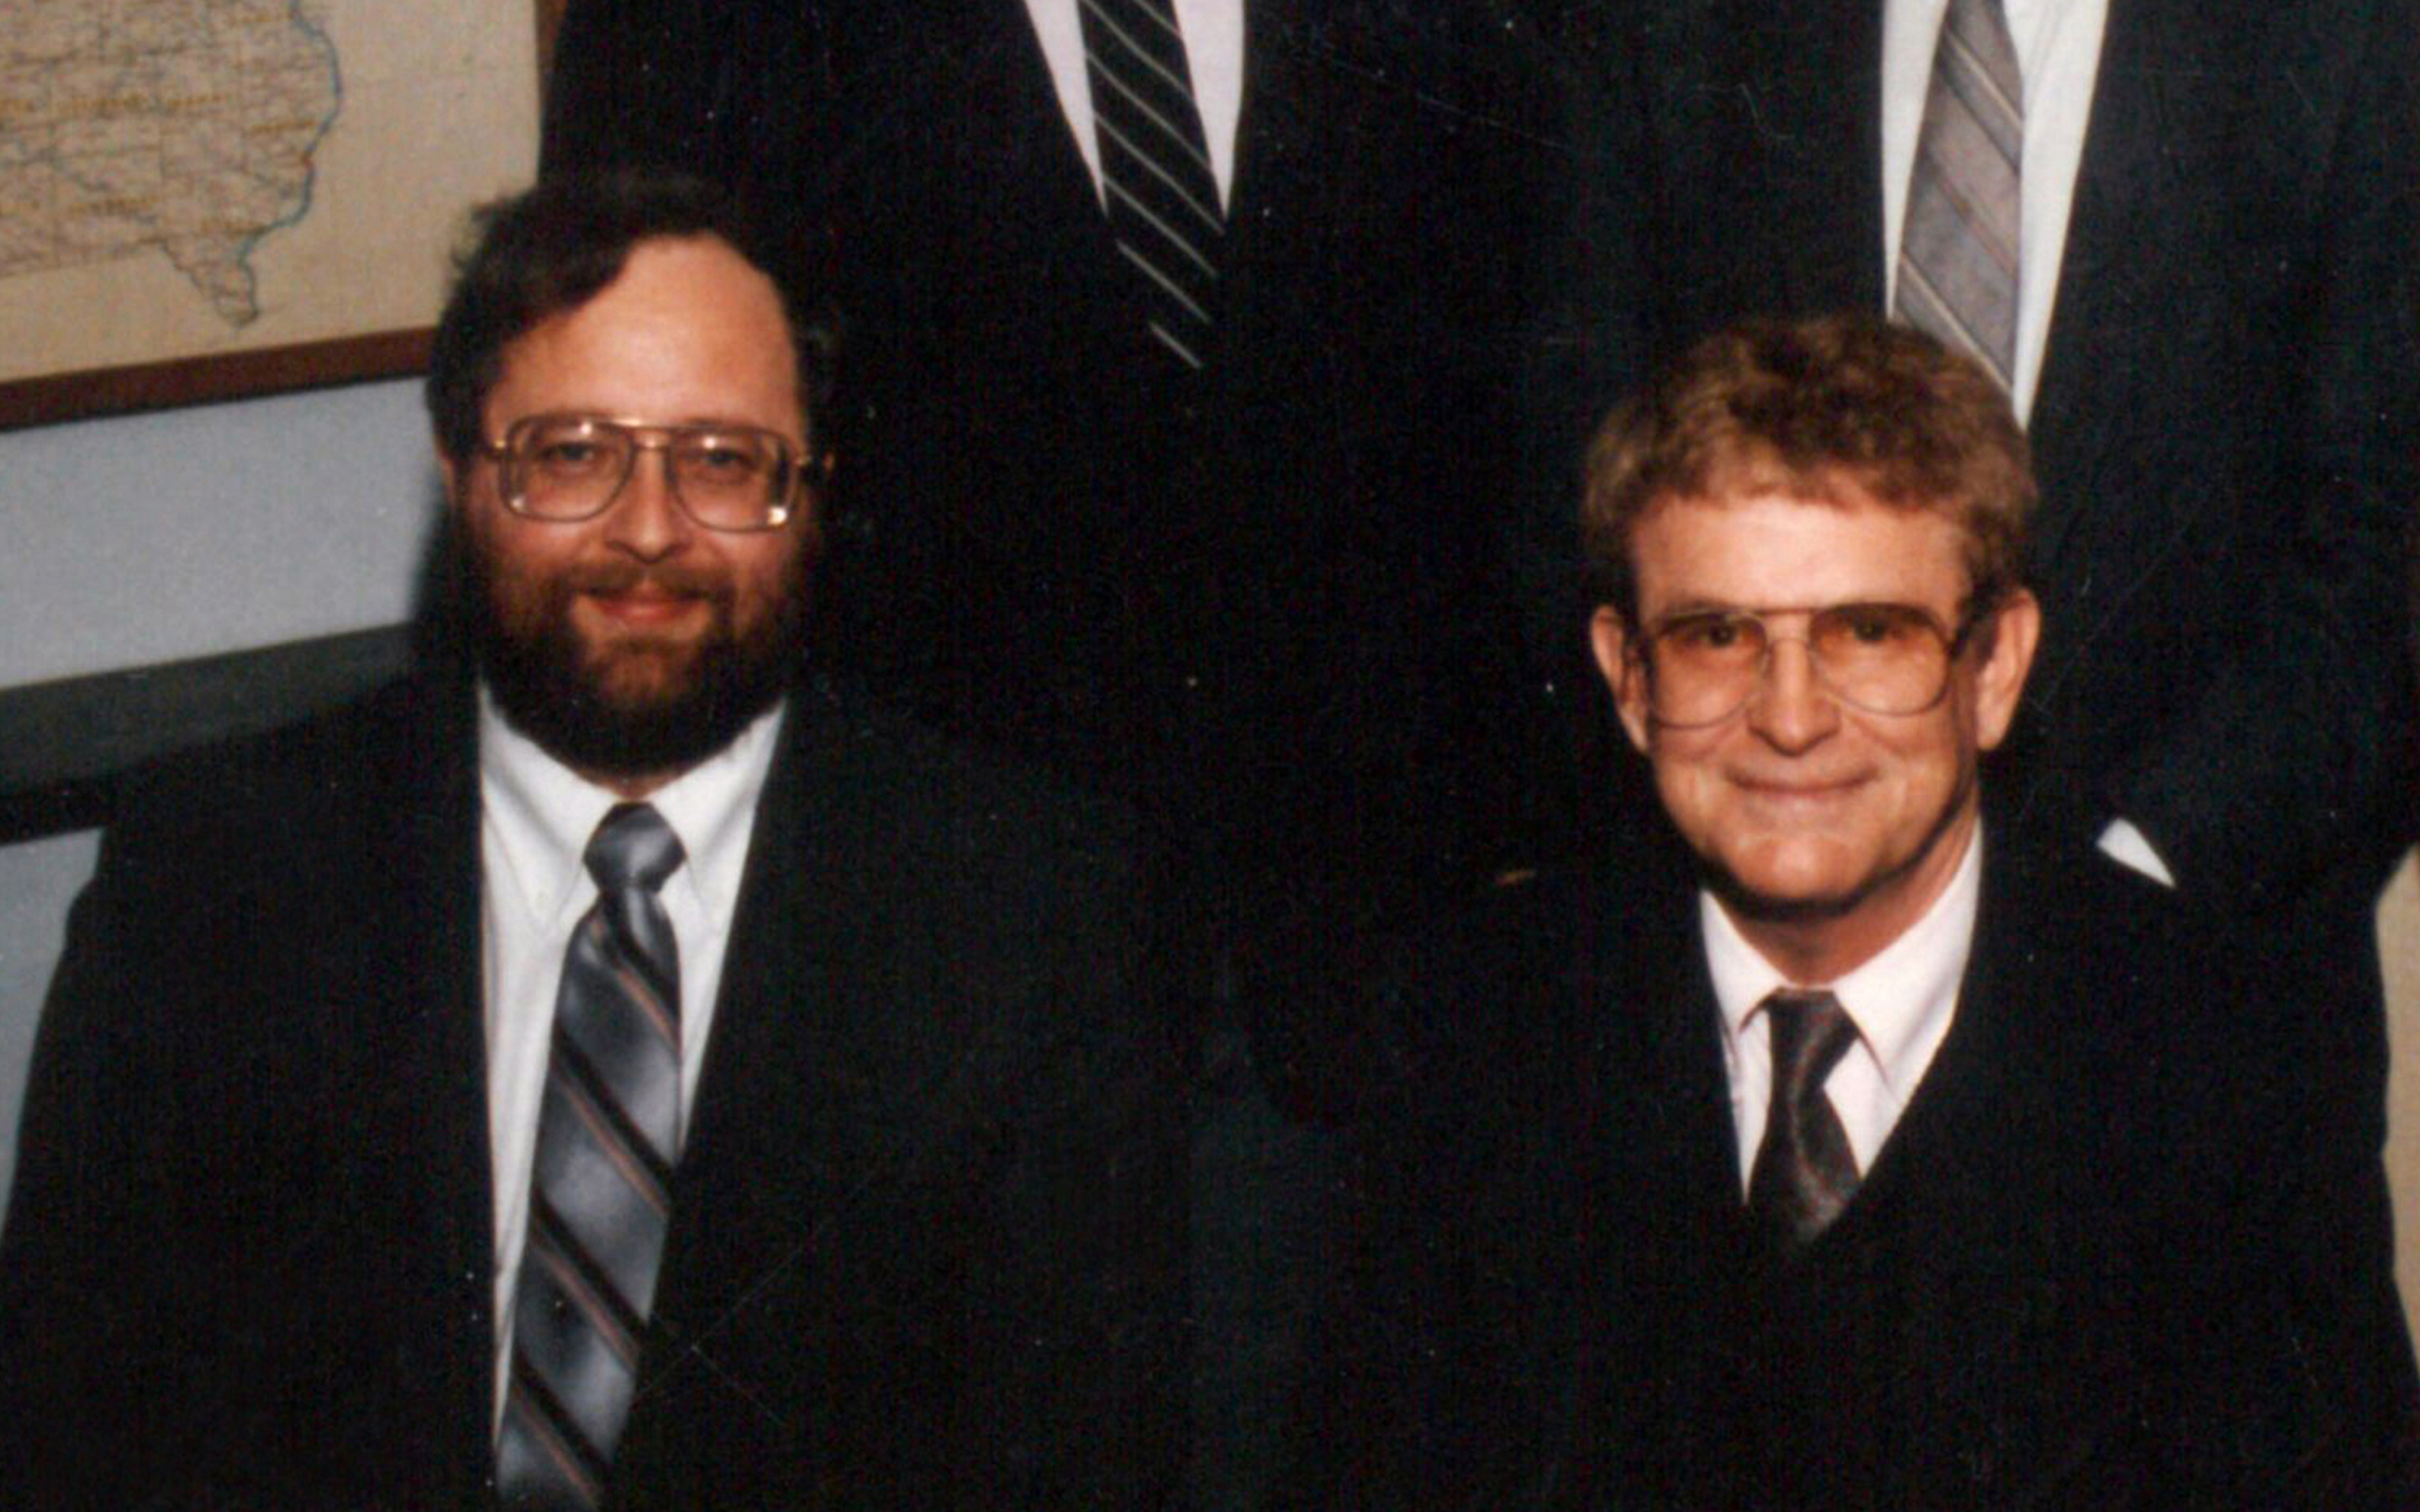 Denny Waugh and Carl Schoenhard, Jr.